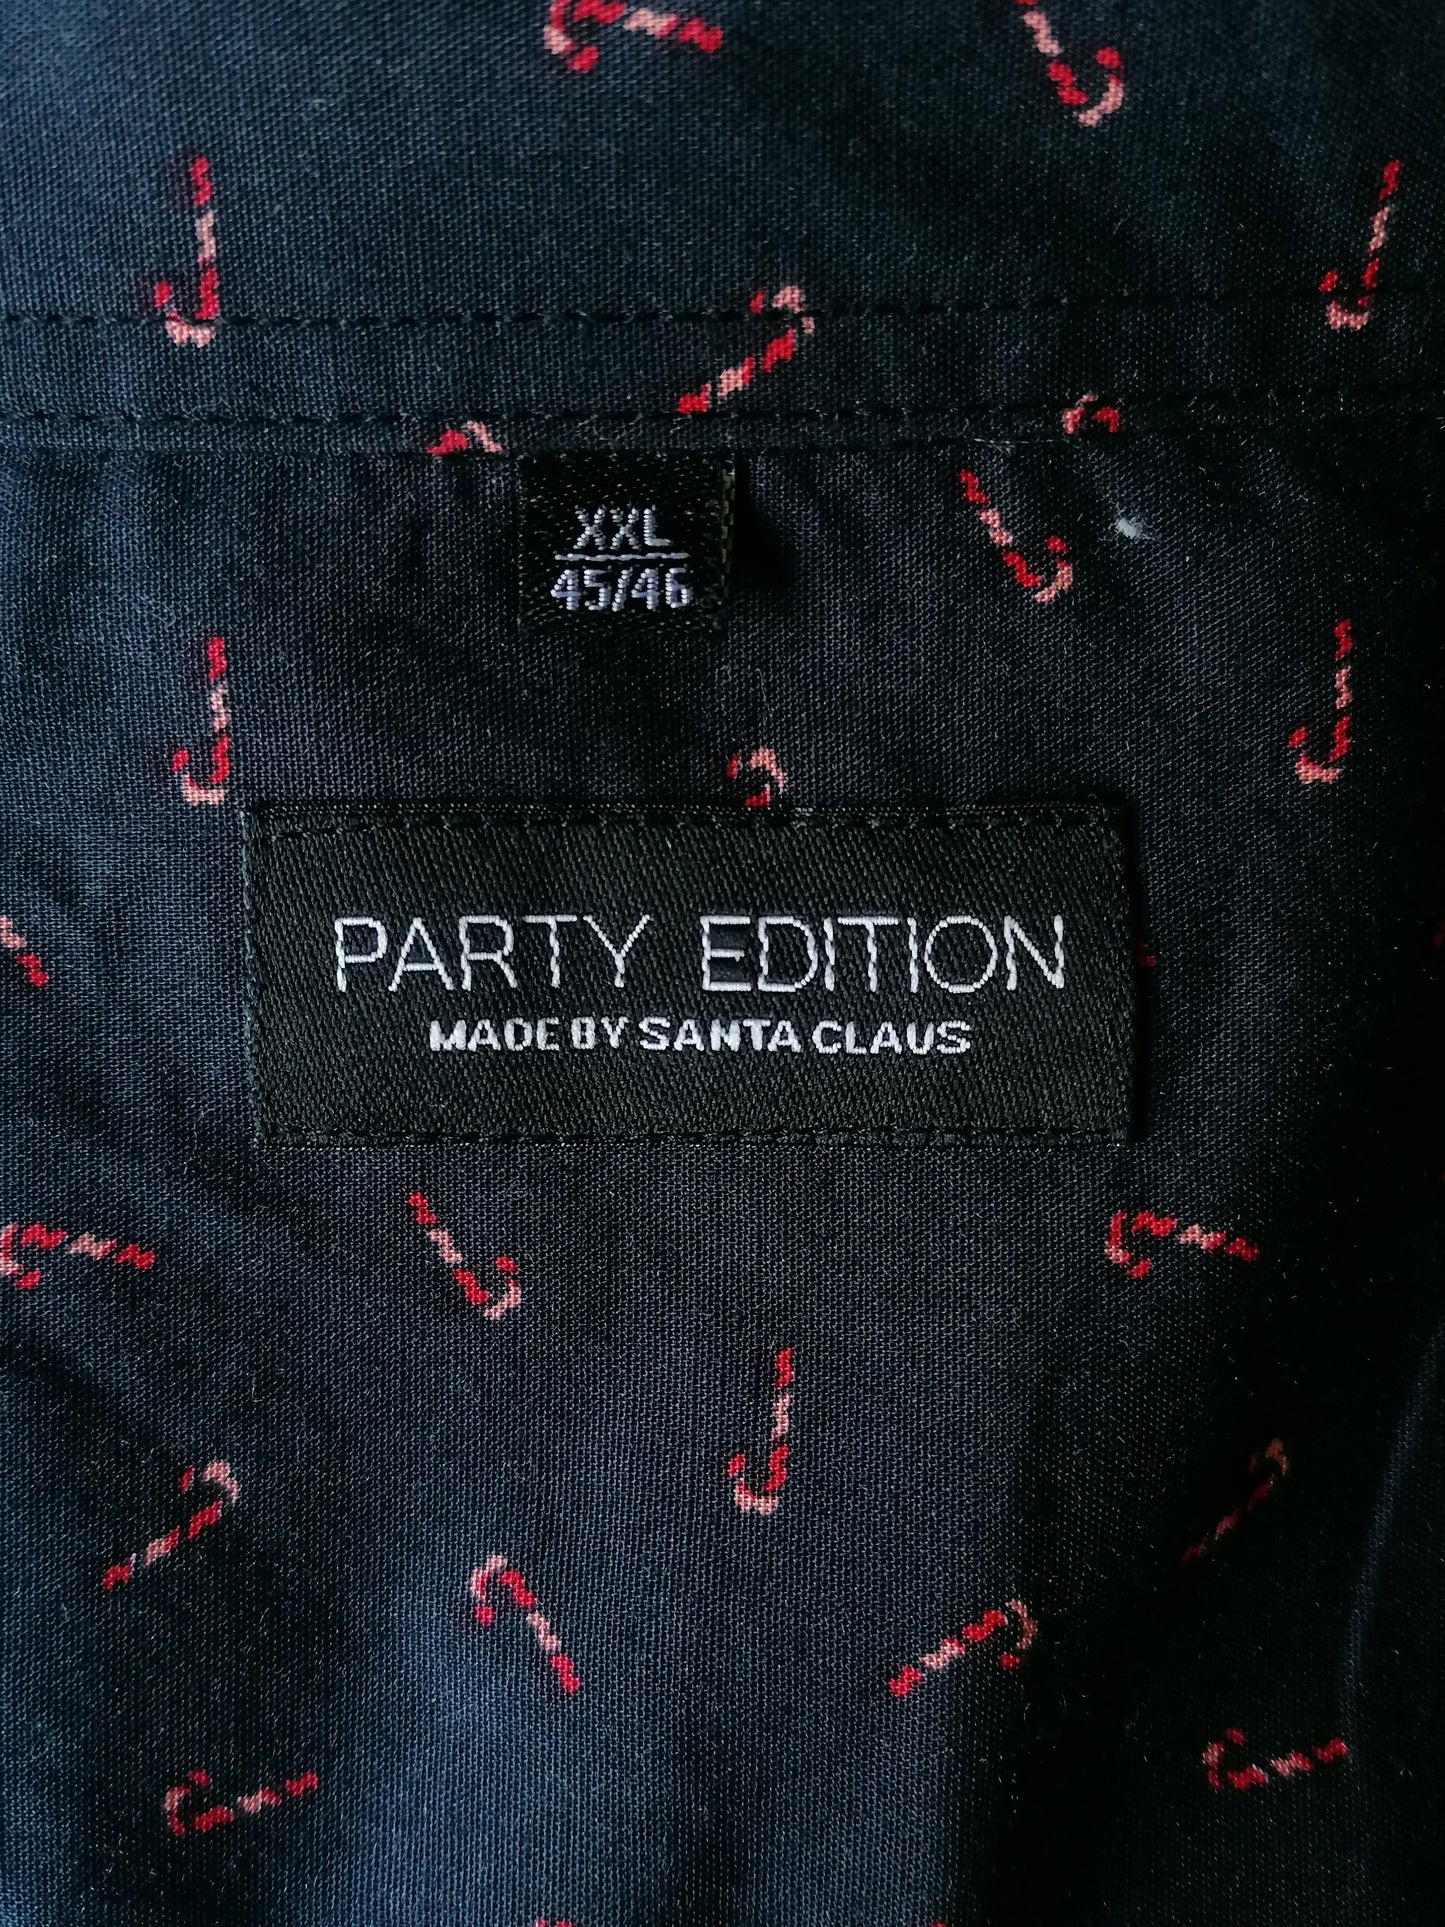 Camisa de edición de fiesta. Impresión rosa rojo negro. Tamaño XXL / 2XL.